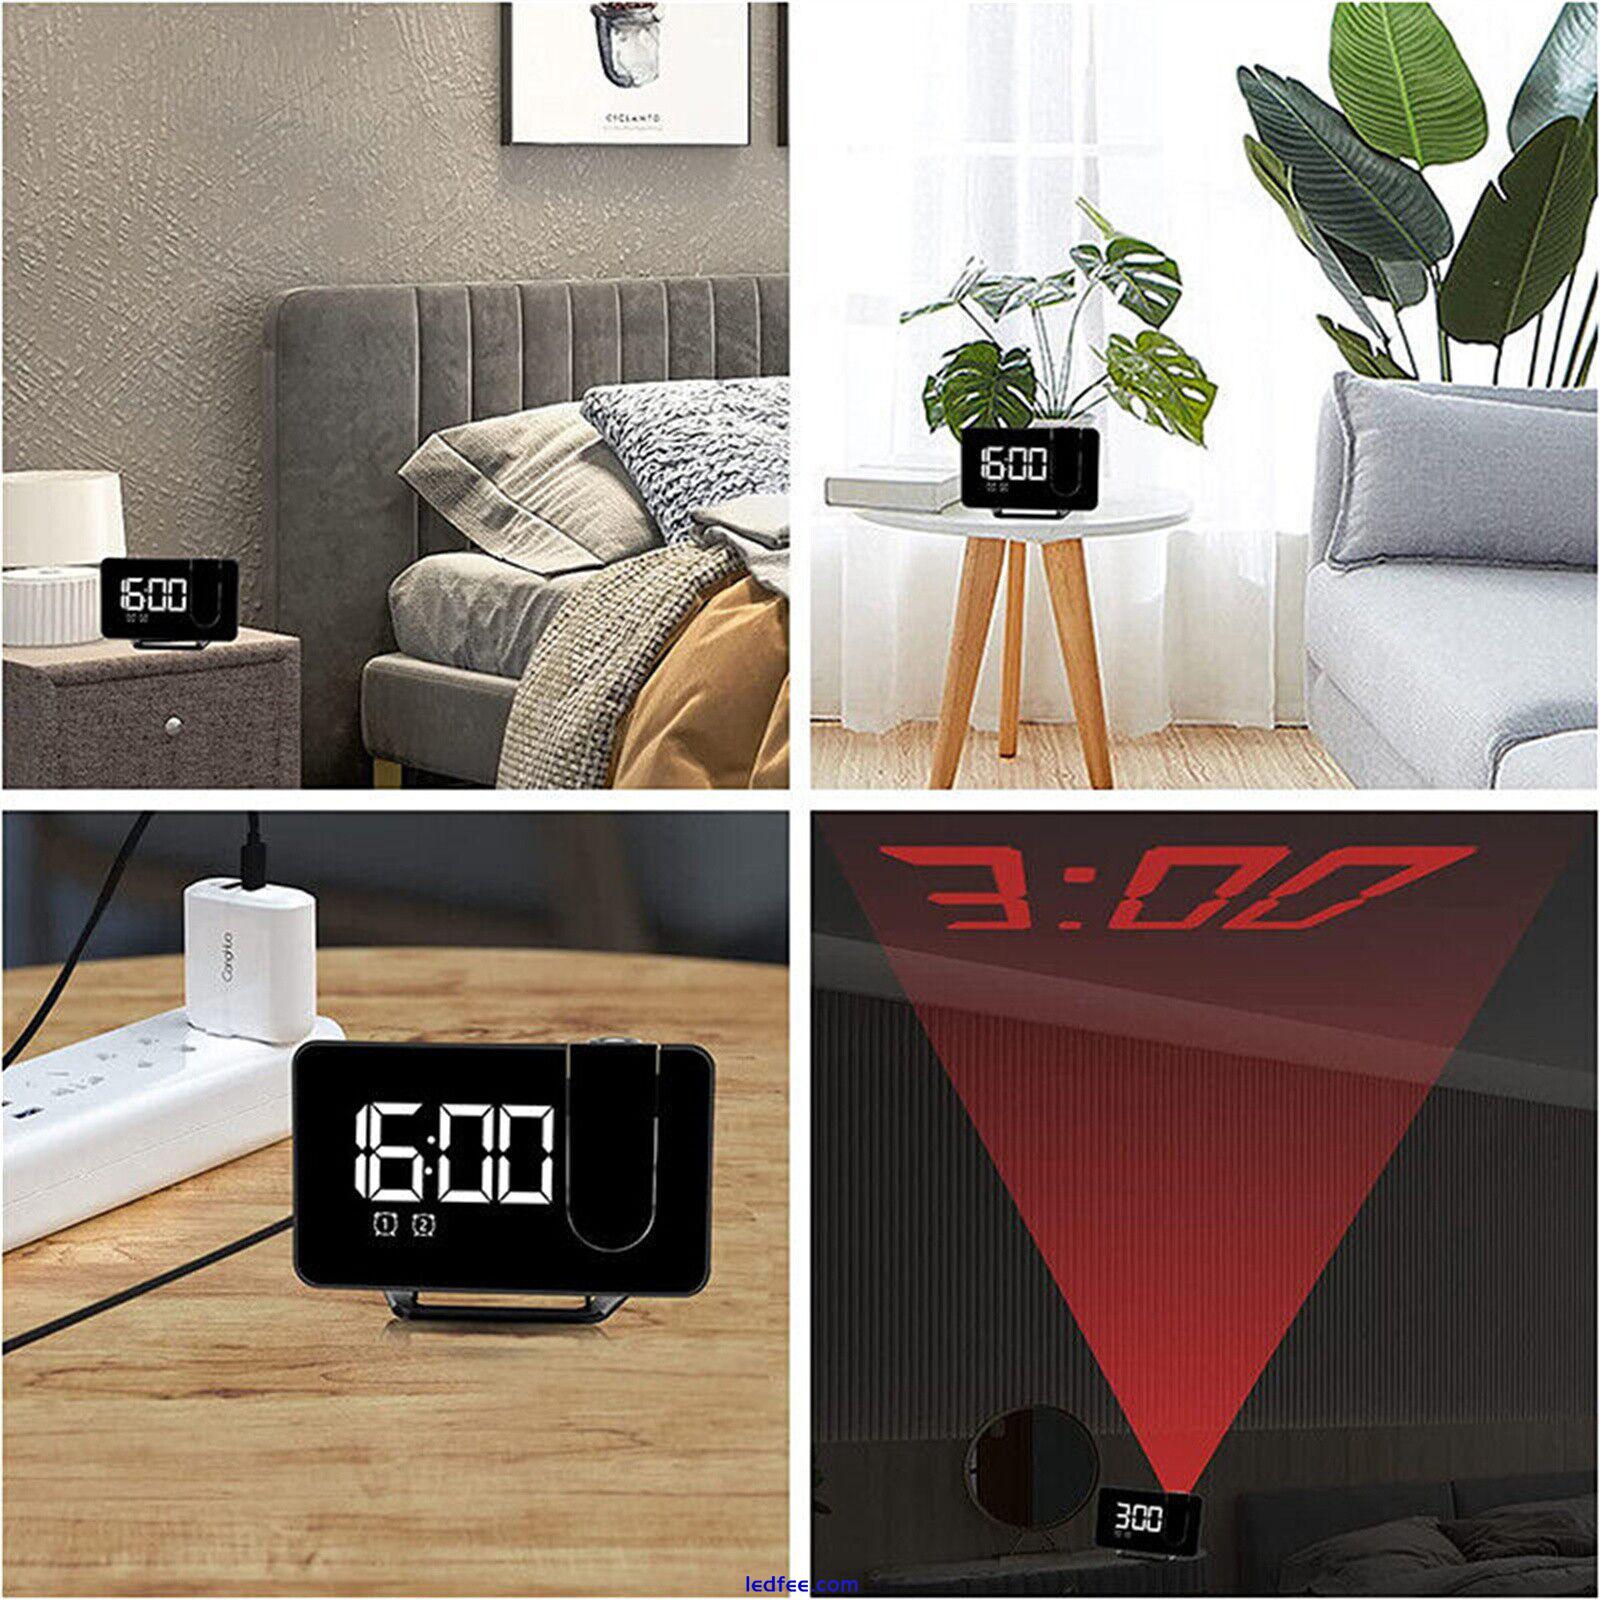 USB Projection Alarm Clock Snooze Digital LED Display Dual Alarm Clock FM Radio 3 